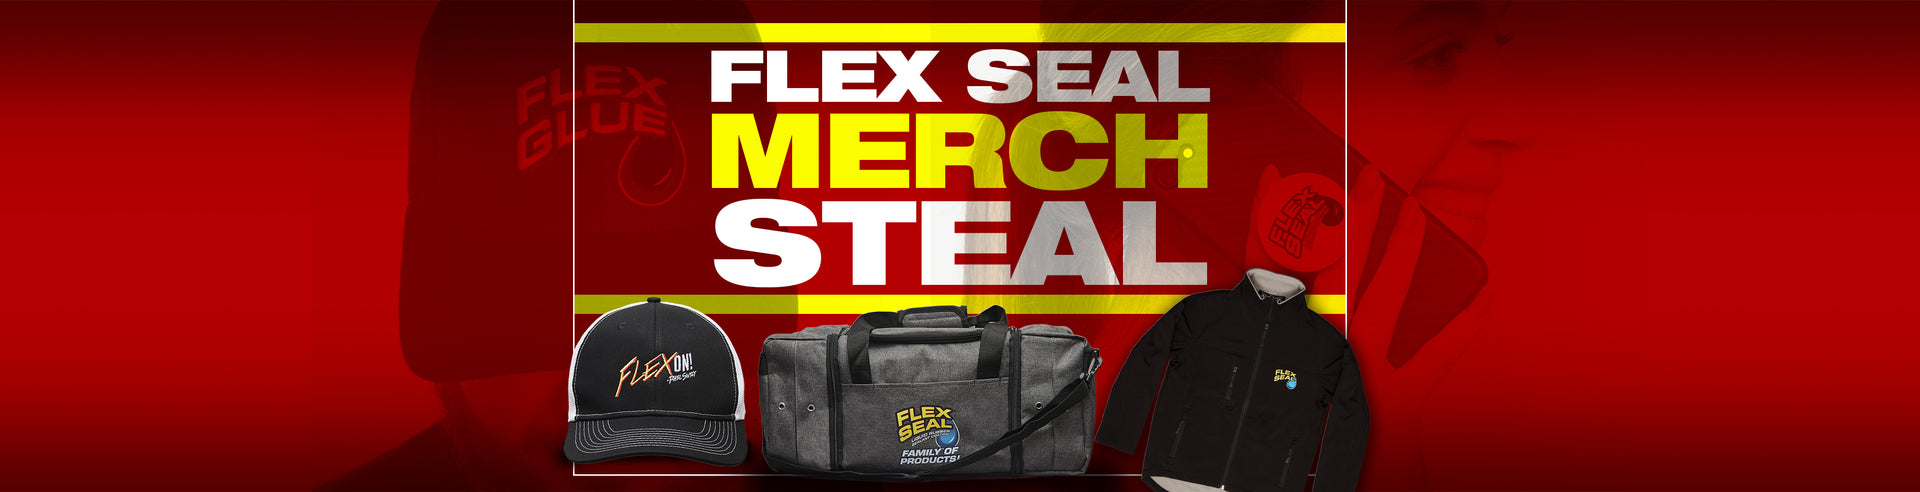 Flex Seal Merch Steal